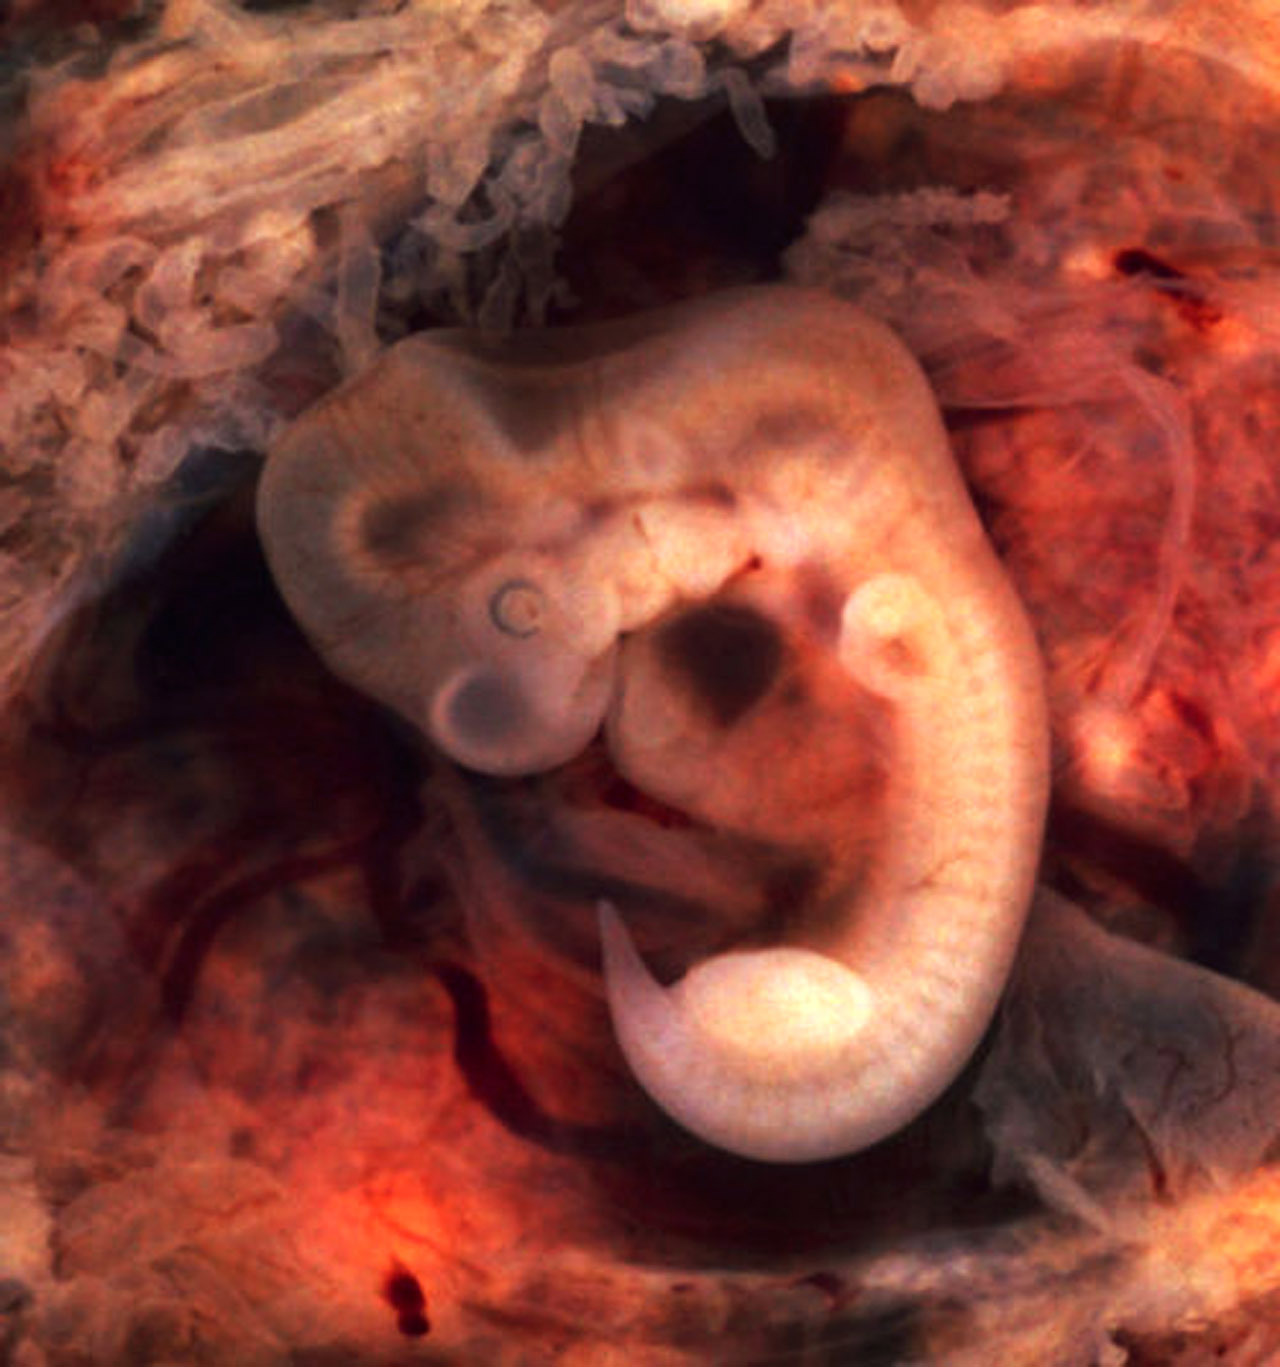 A five week old human embryo